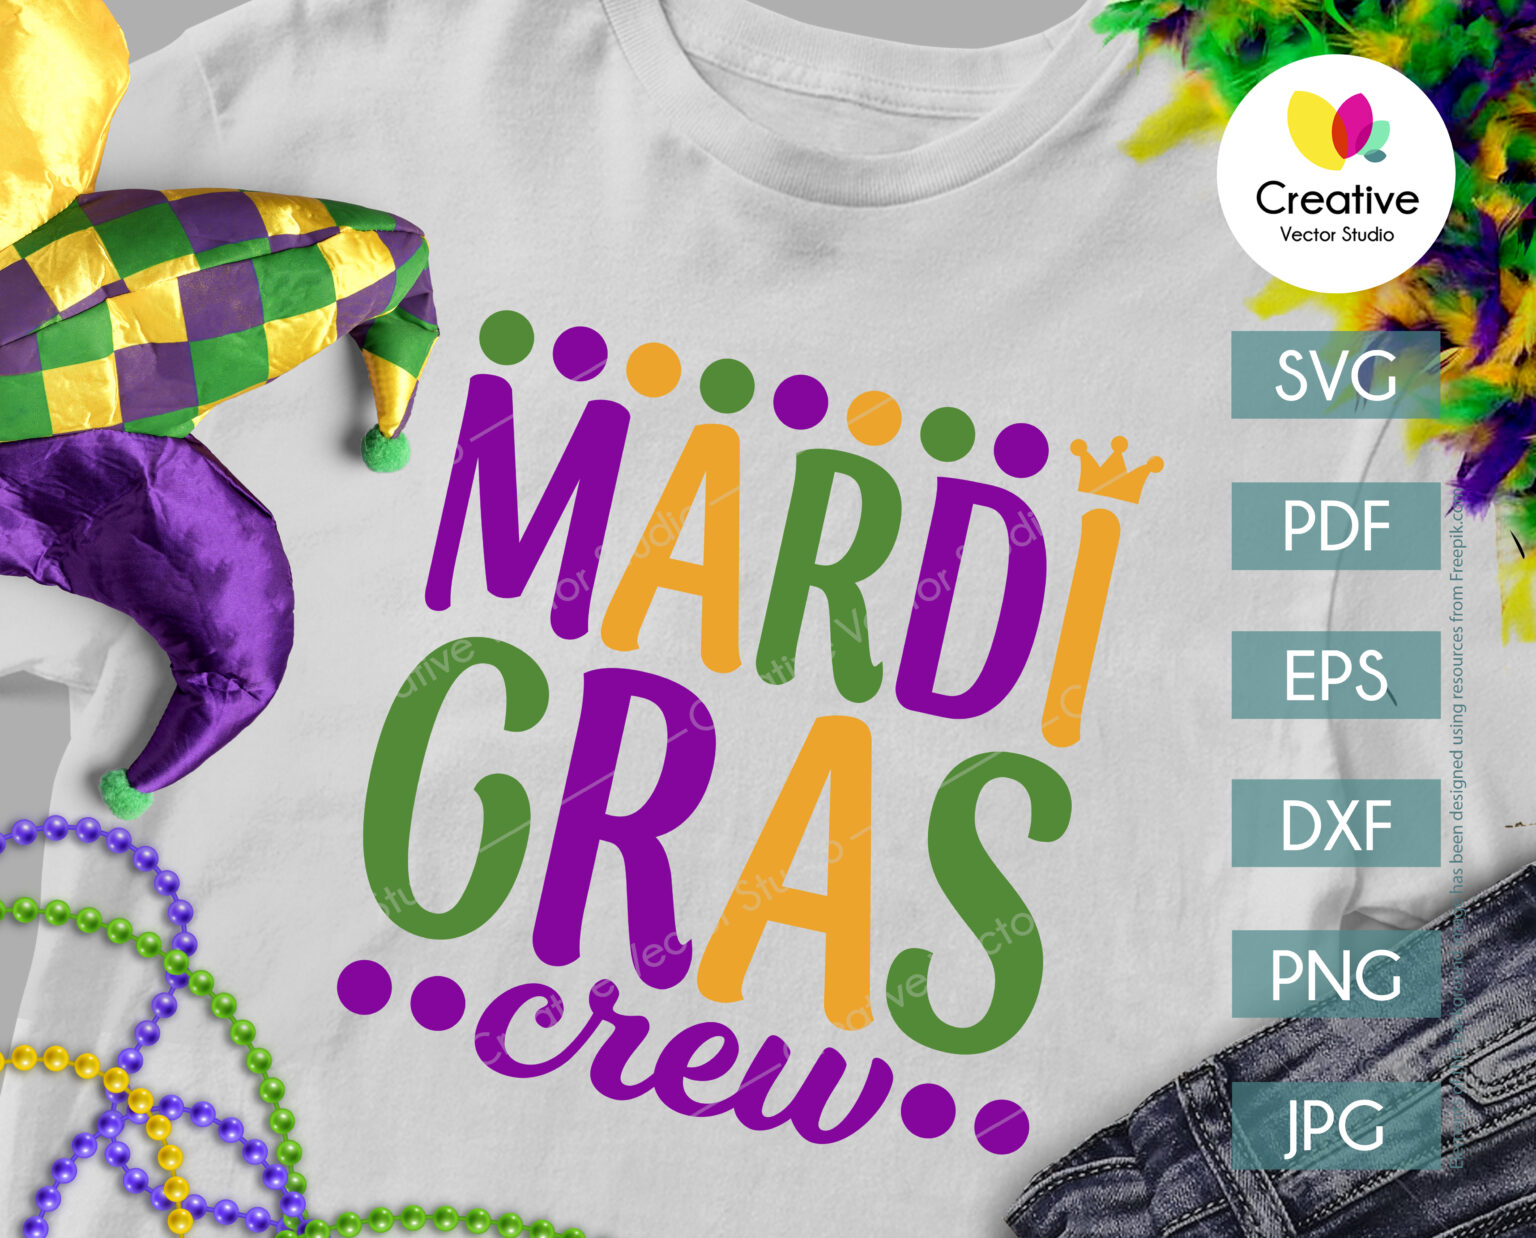 Download Mardi Gras Crew SVG | Creative Vector Studio